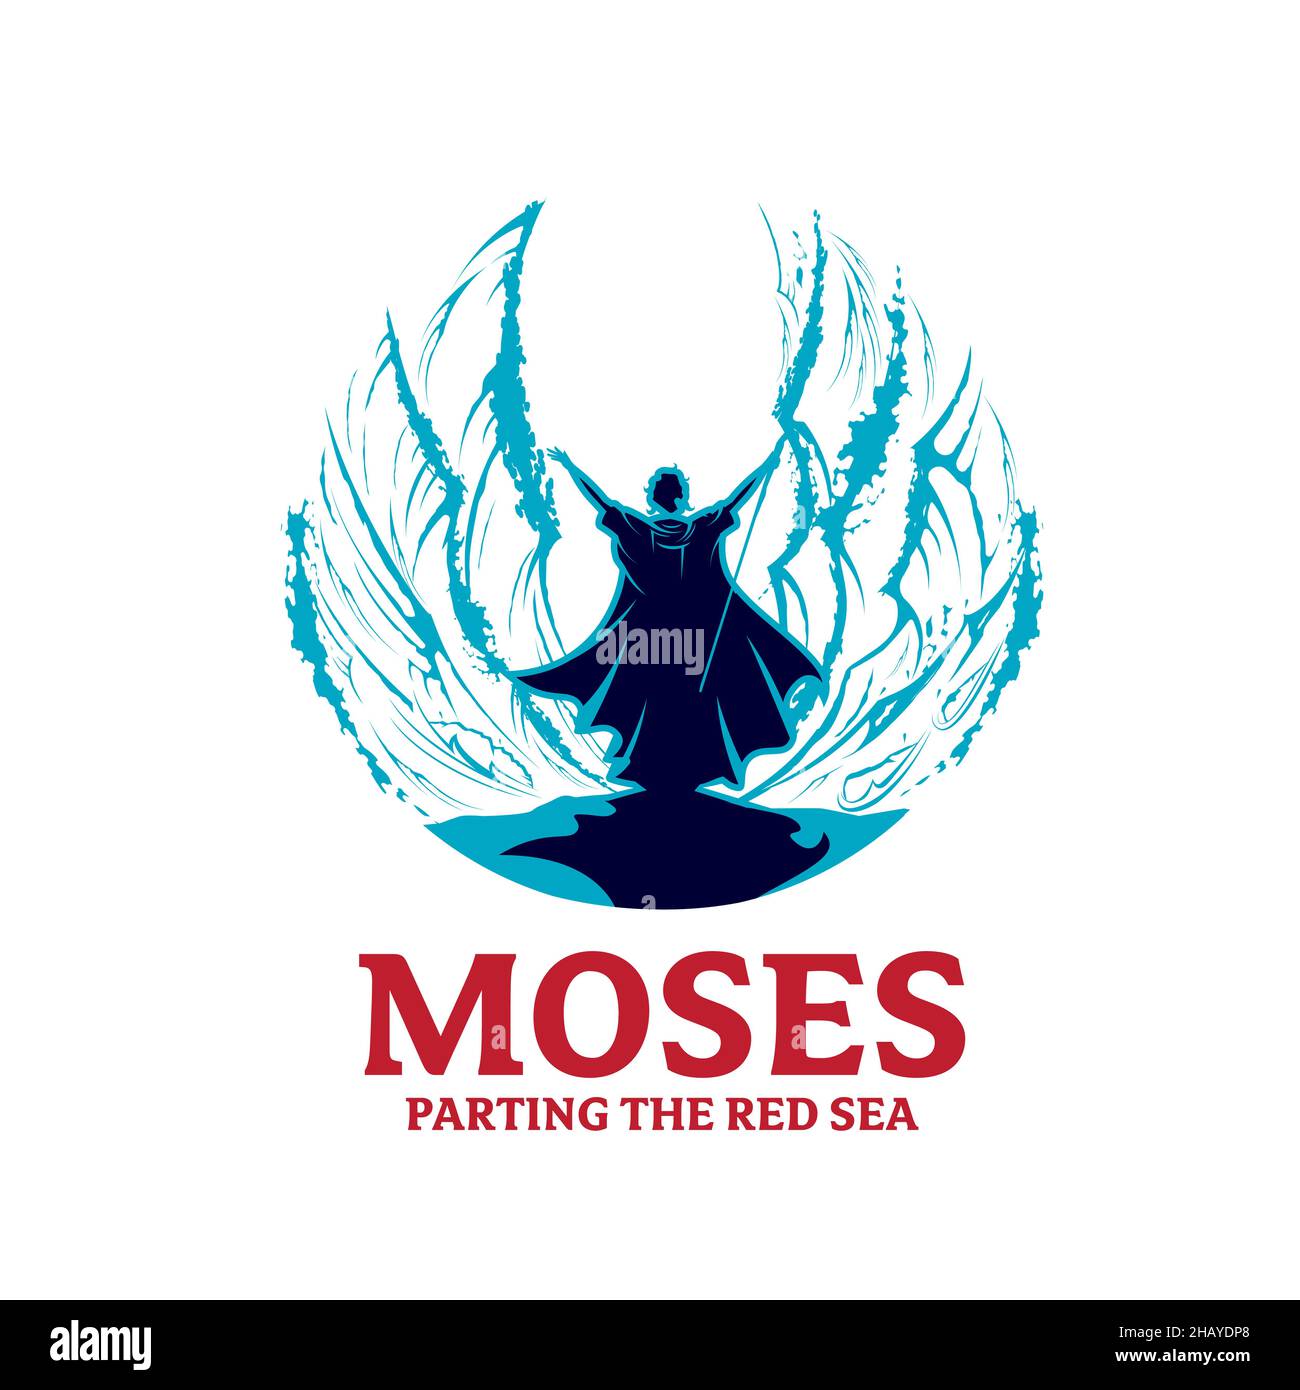 Moses Parting the Red Sea Vektor-Illustration für Poster, T-Shirt-Grafik, Logo oder andere Zwecke Stock Vektor